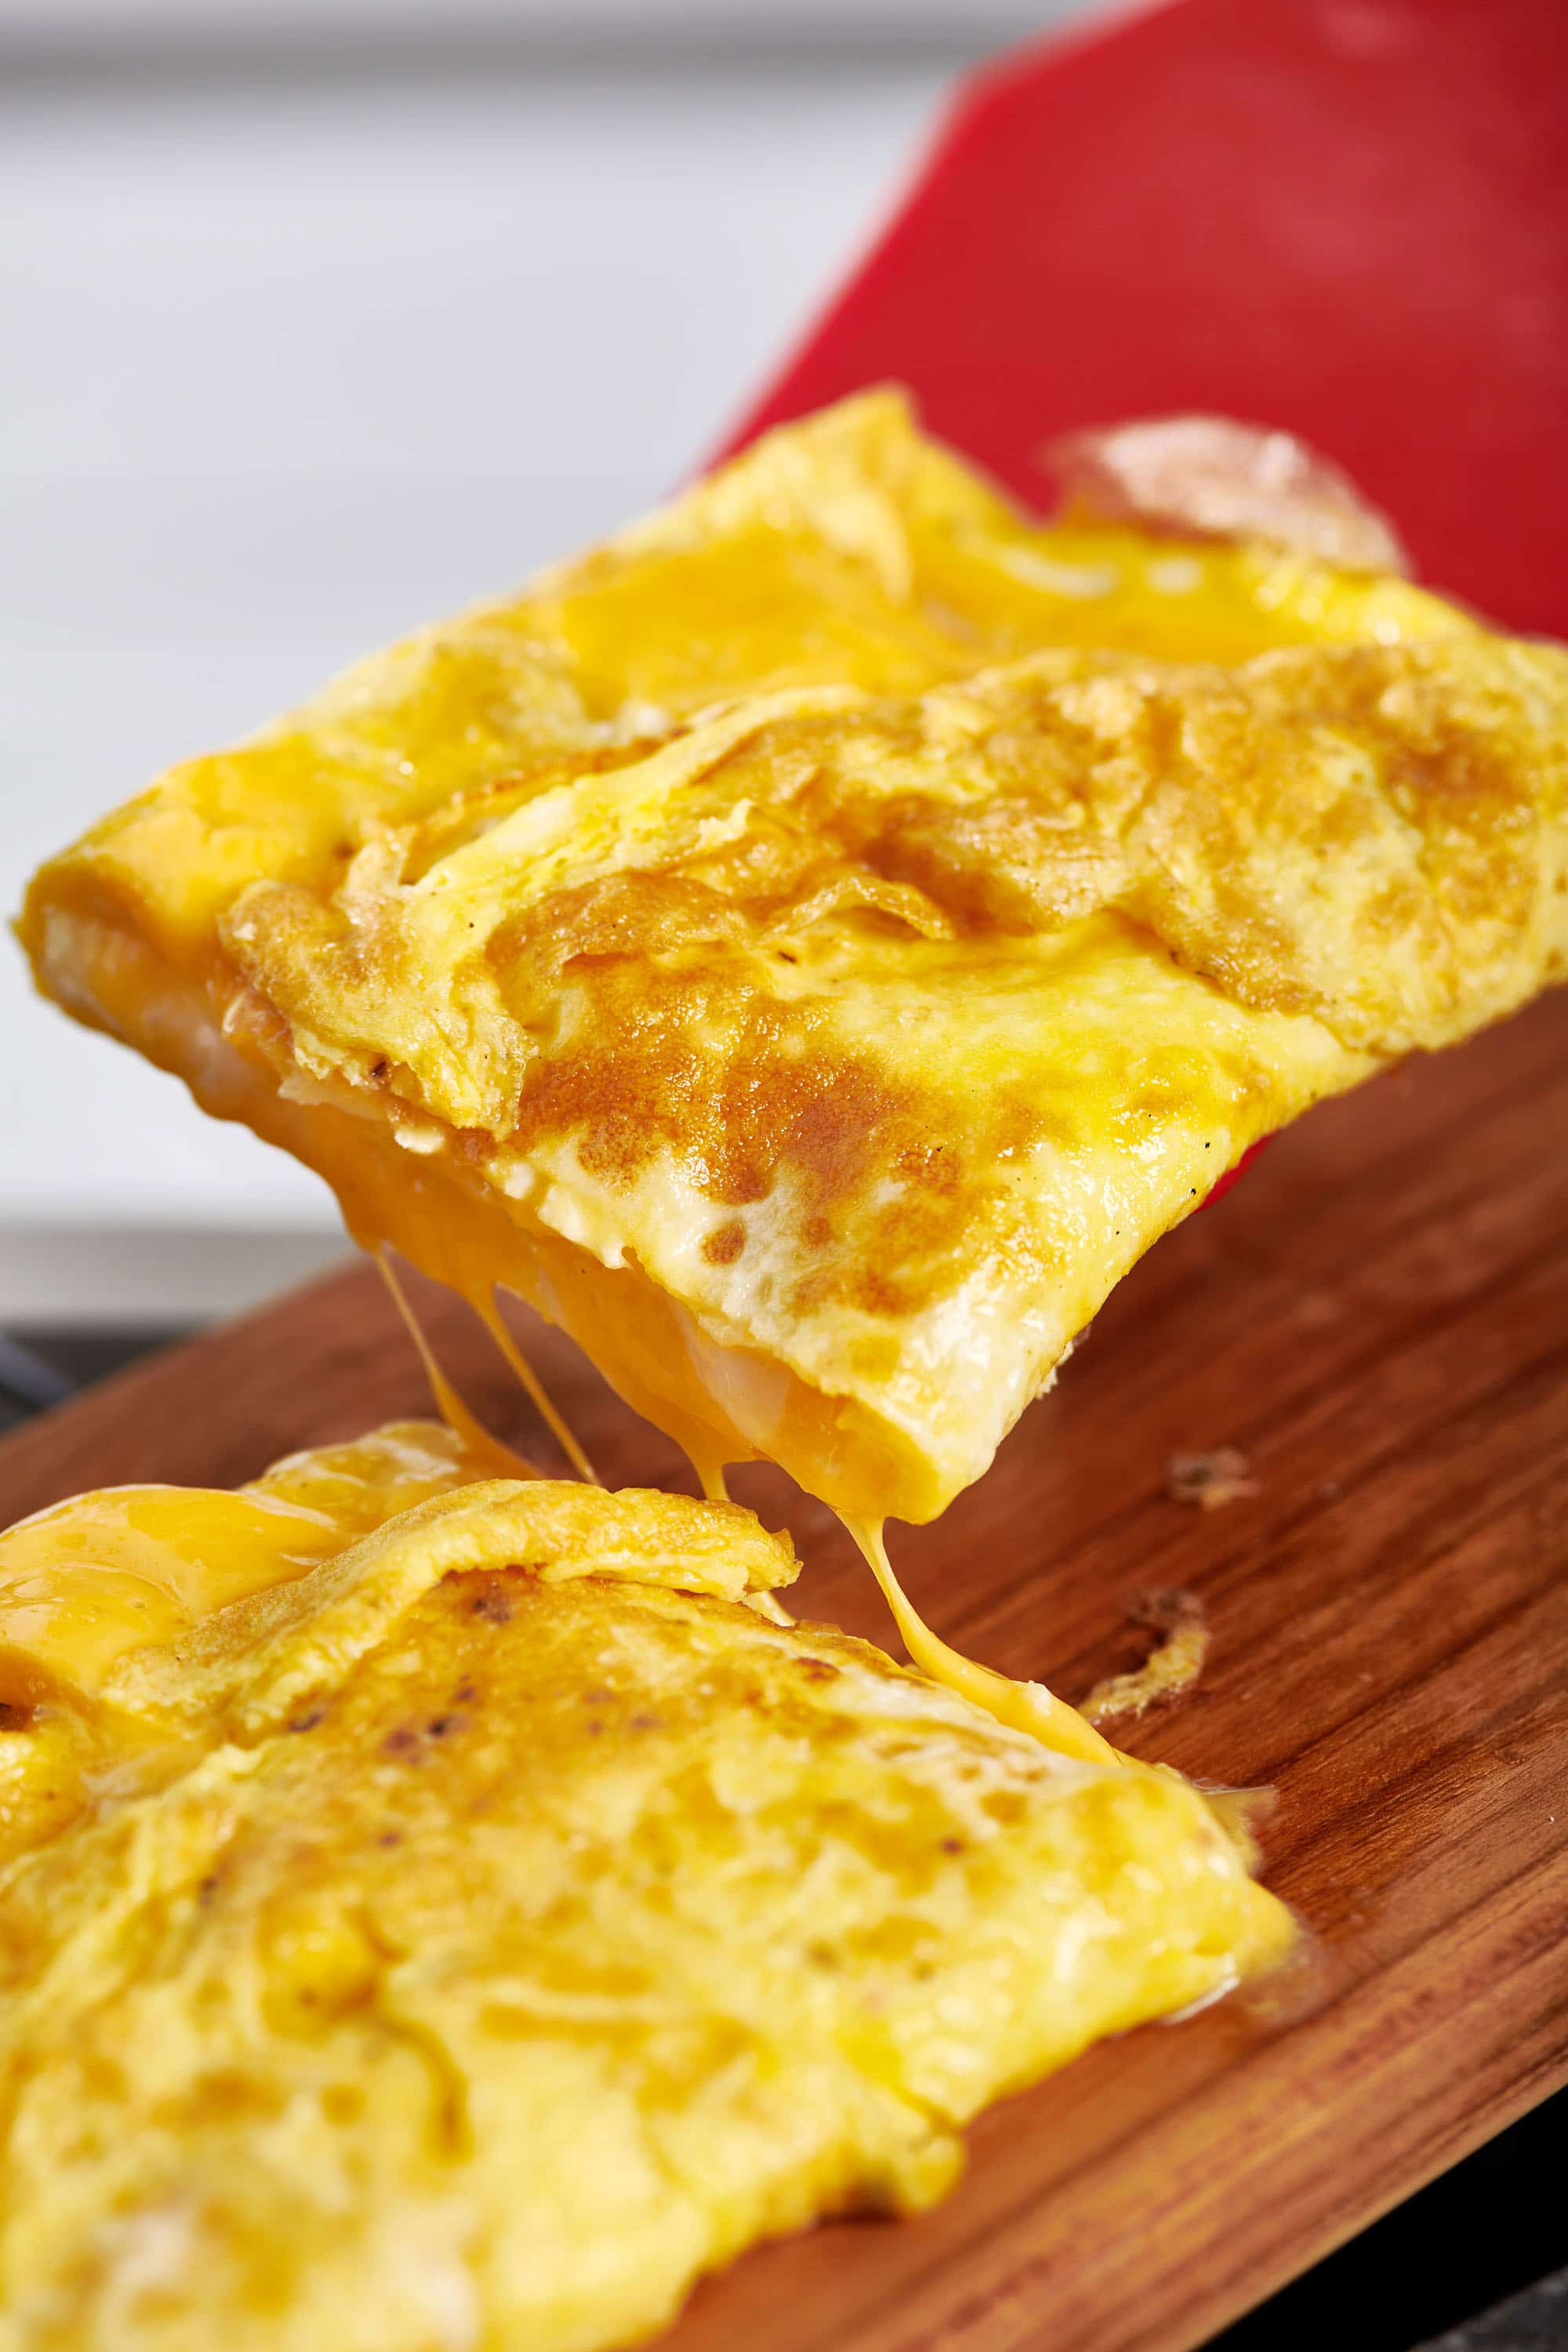 Cheesy eggs on a wooden board.